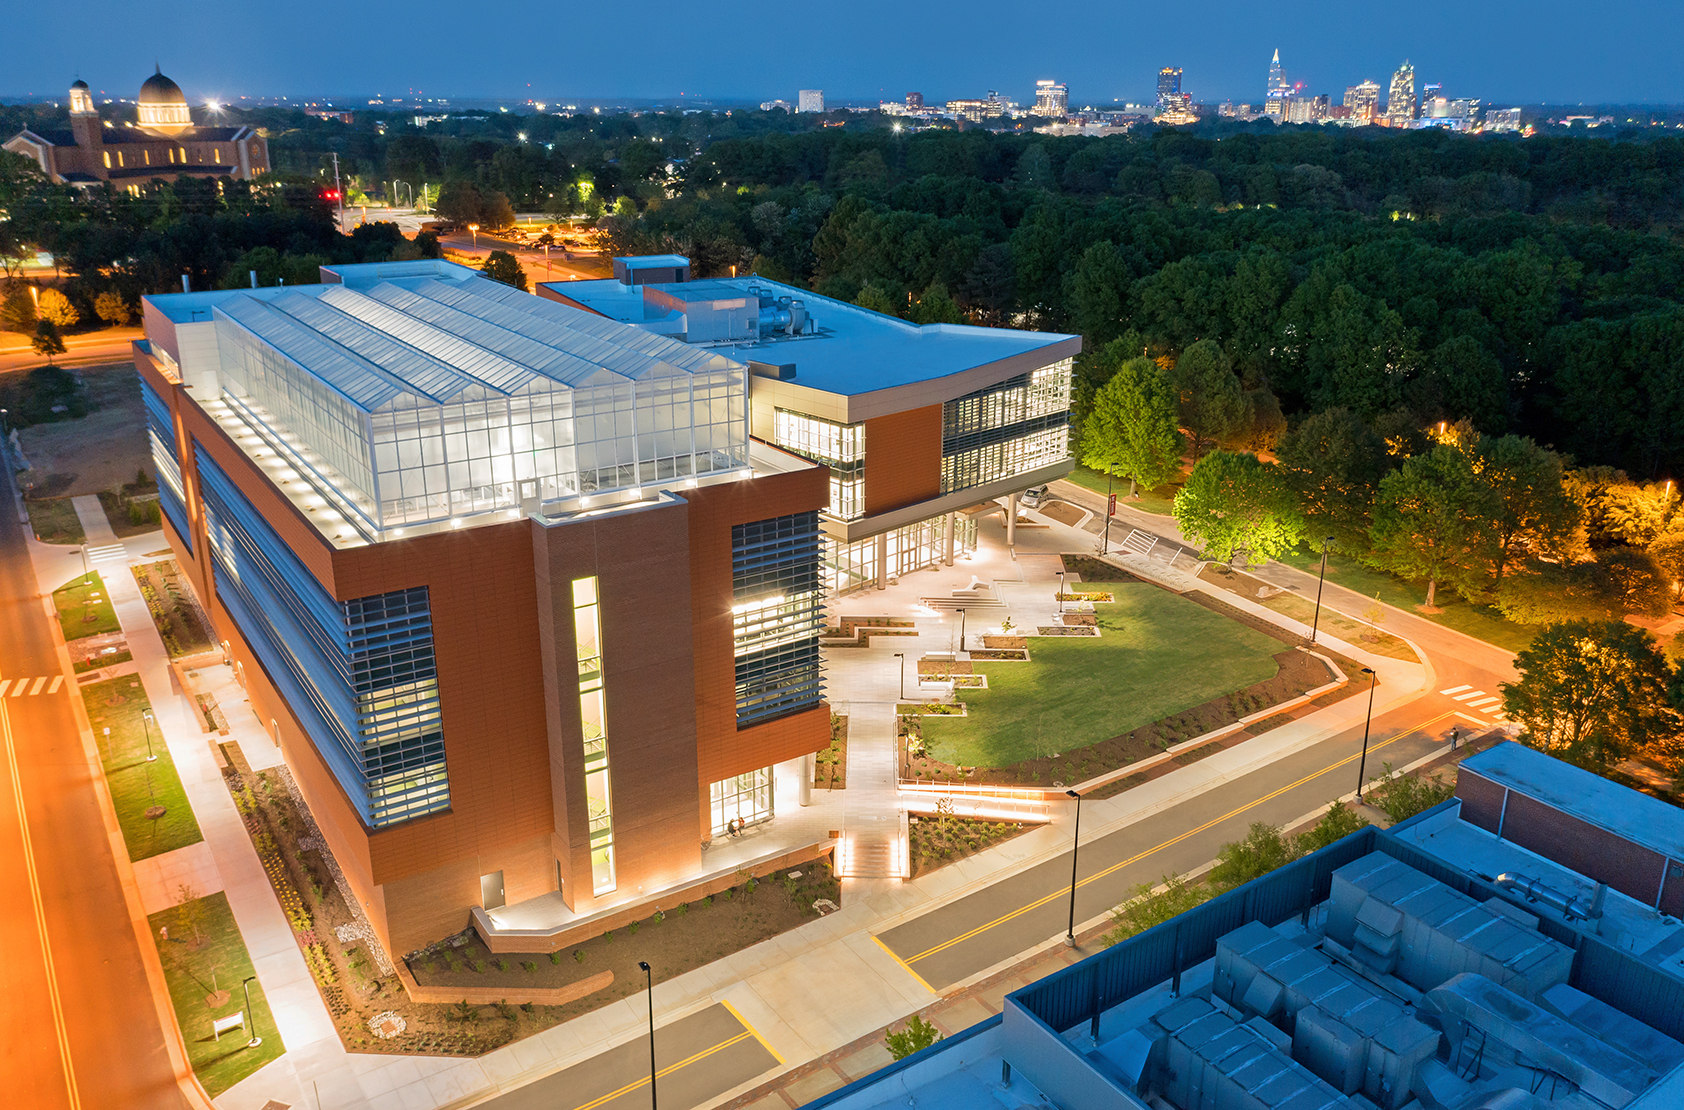 North Carolina State University - Plant Sciences Building